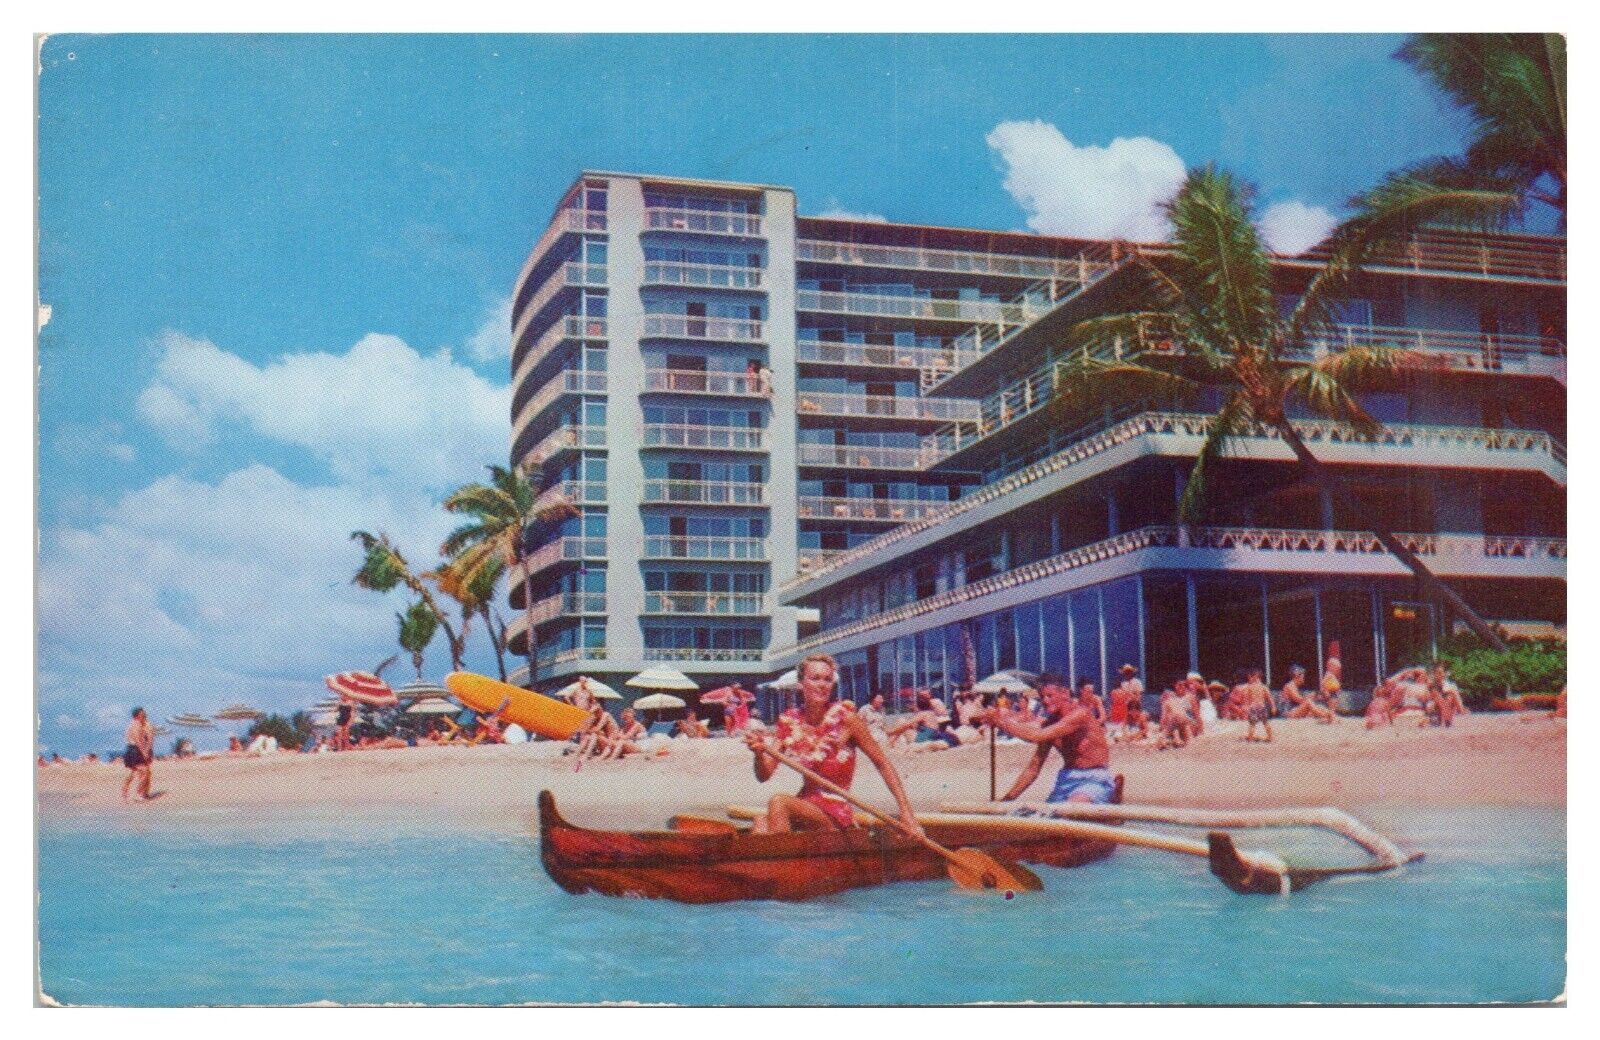 Vintage The Reef Hotel on the Beach at Waikiki Hawaii Postcard c1957 Chrome